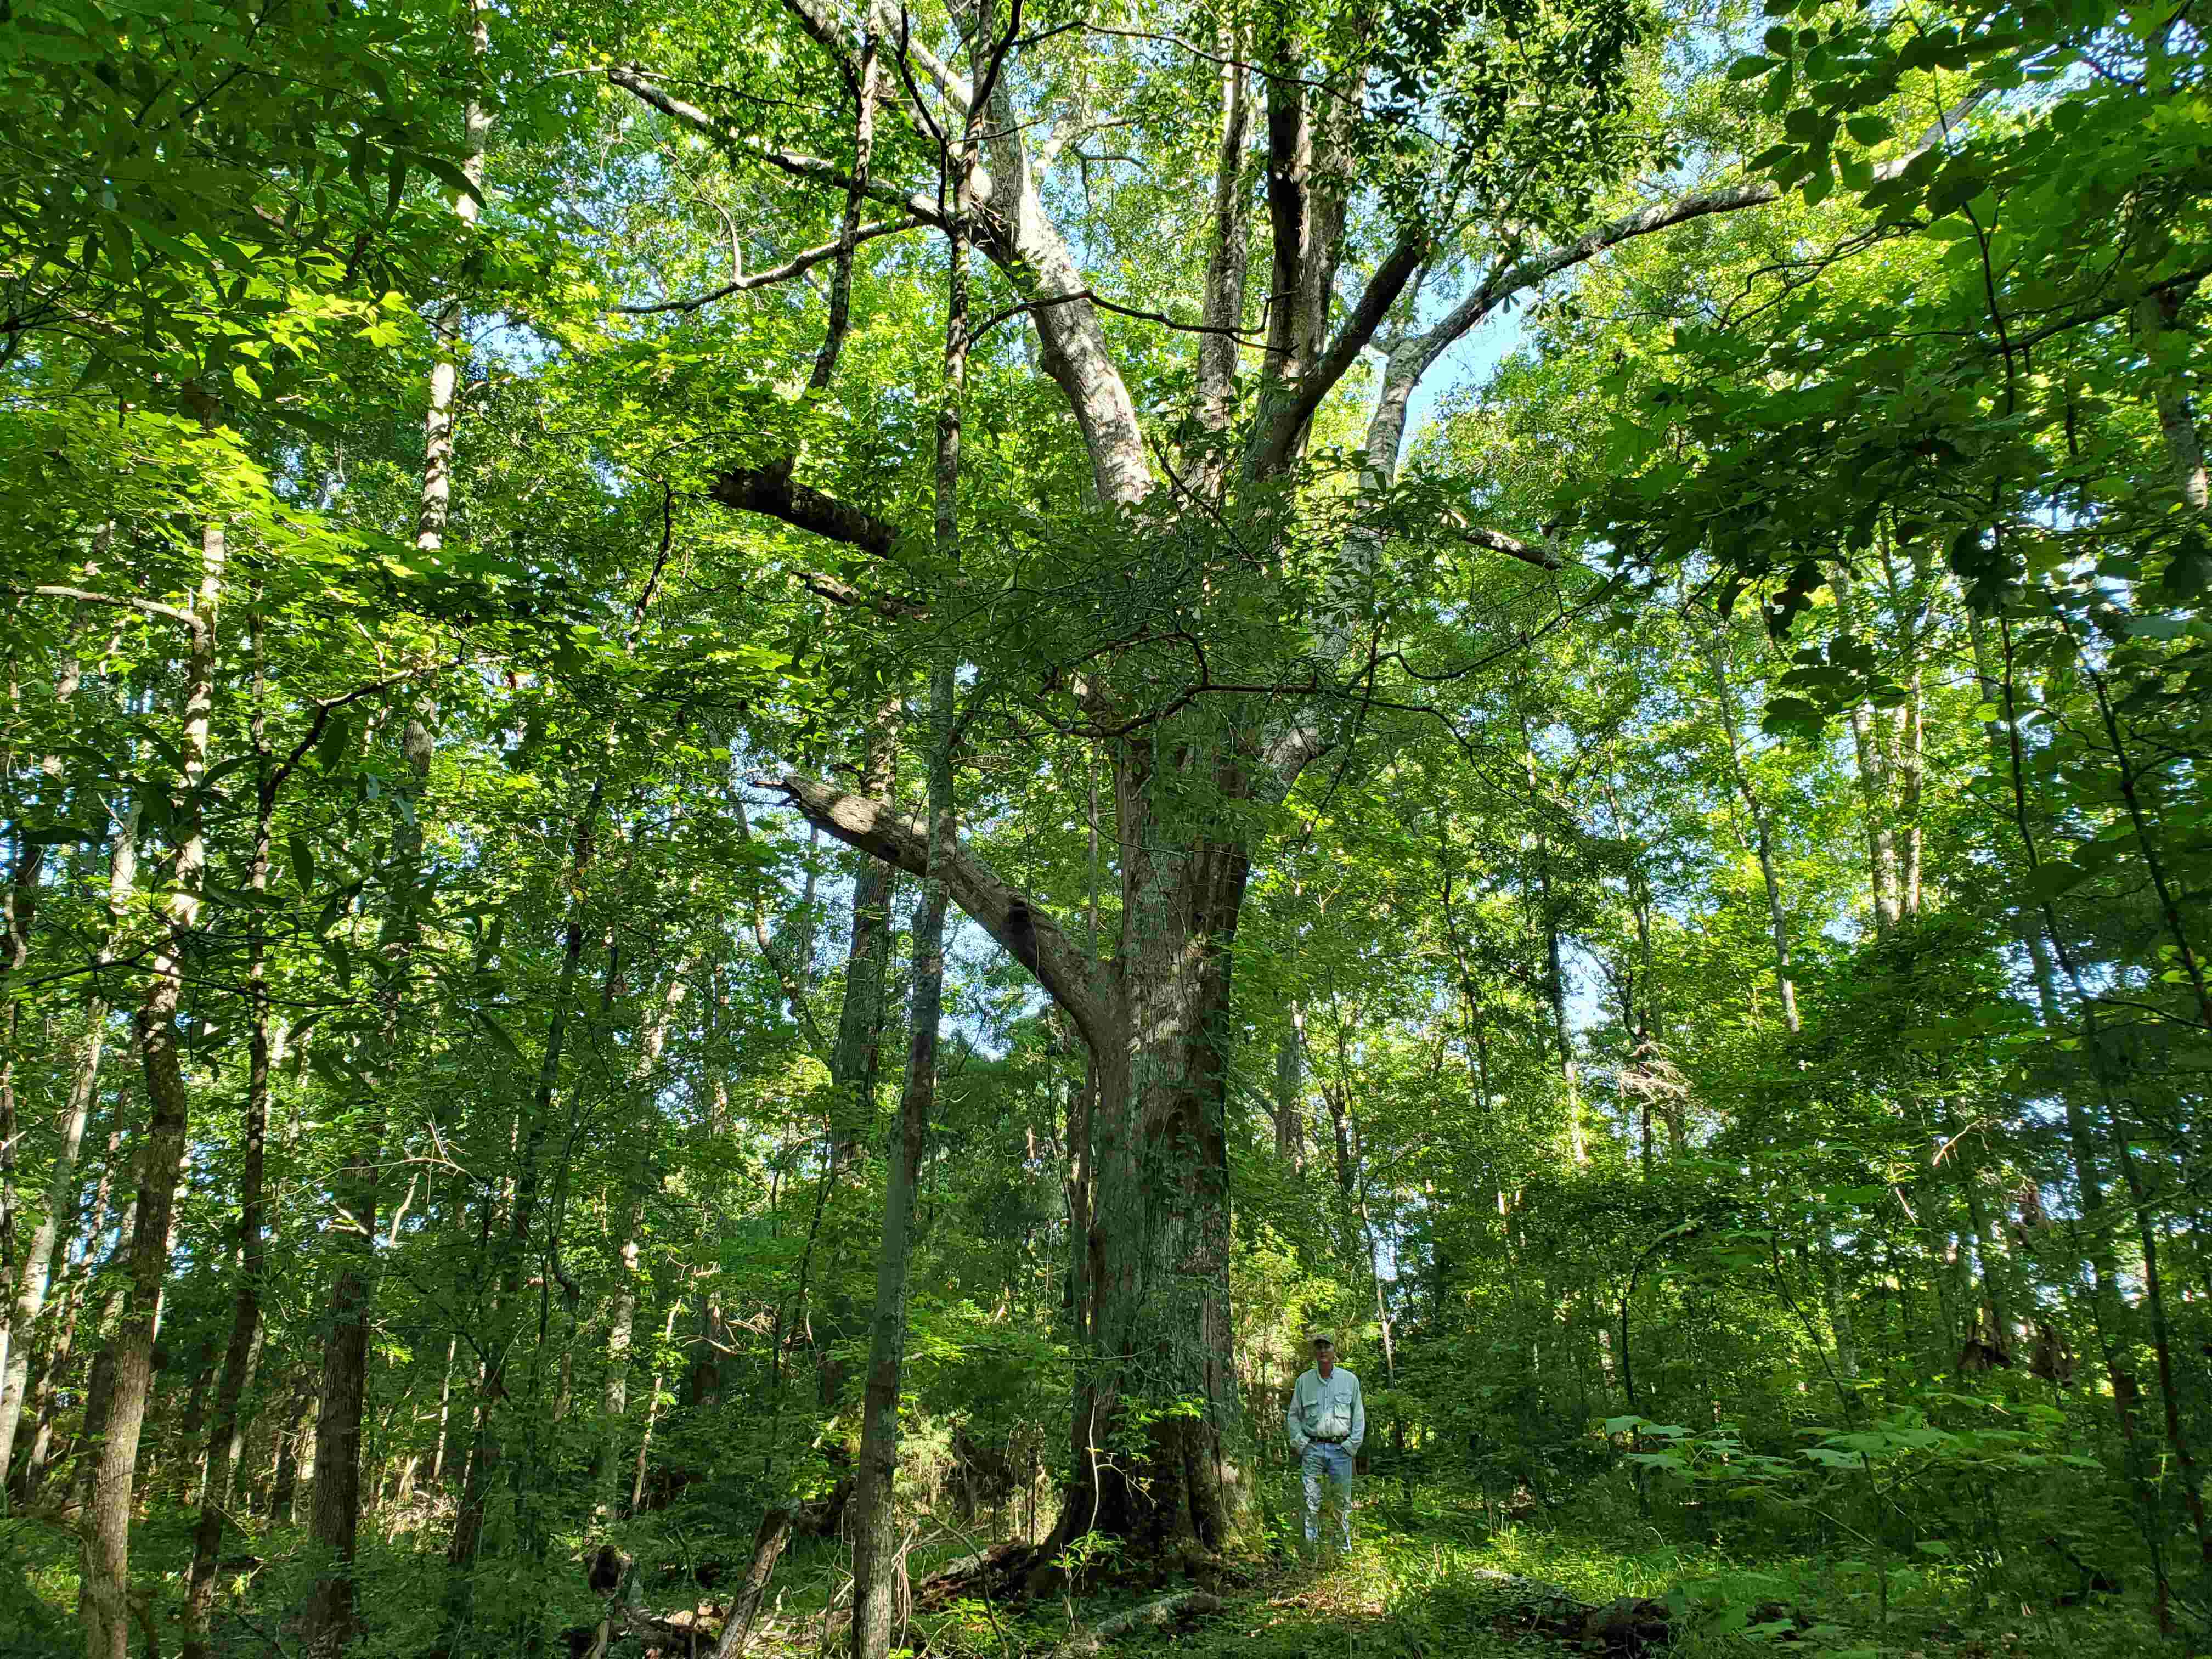 A towering oak tree